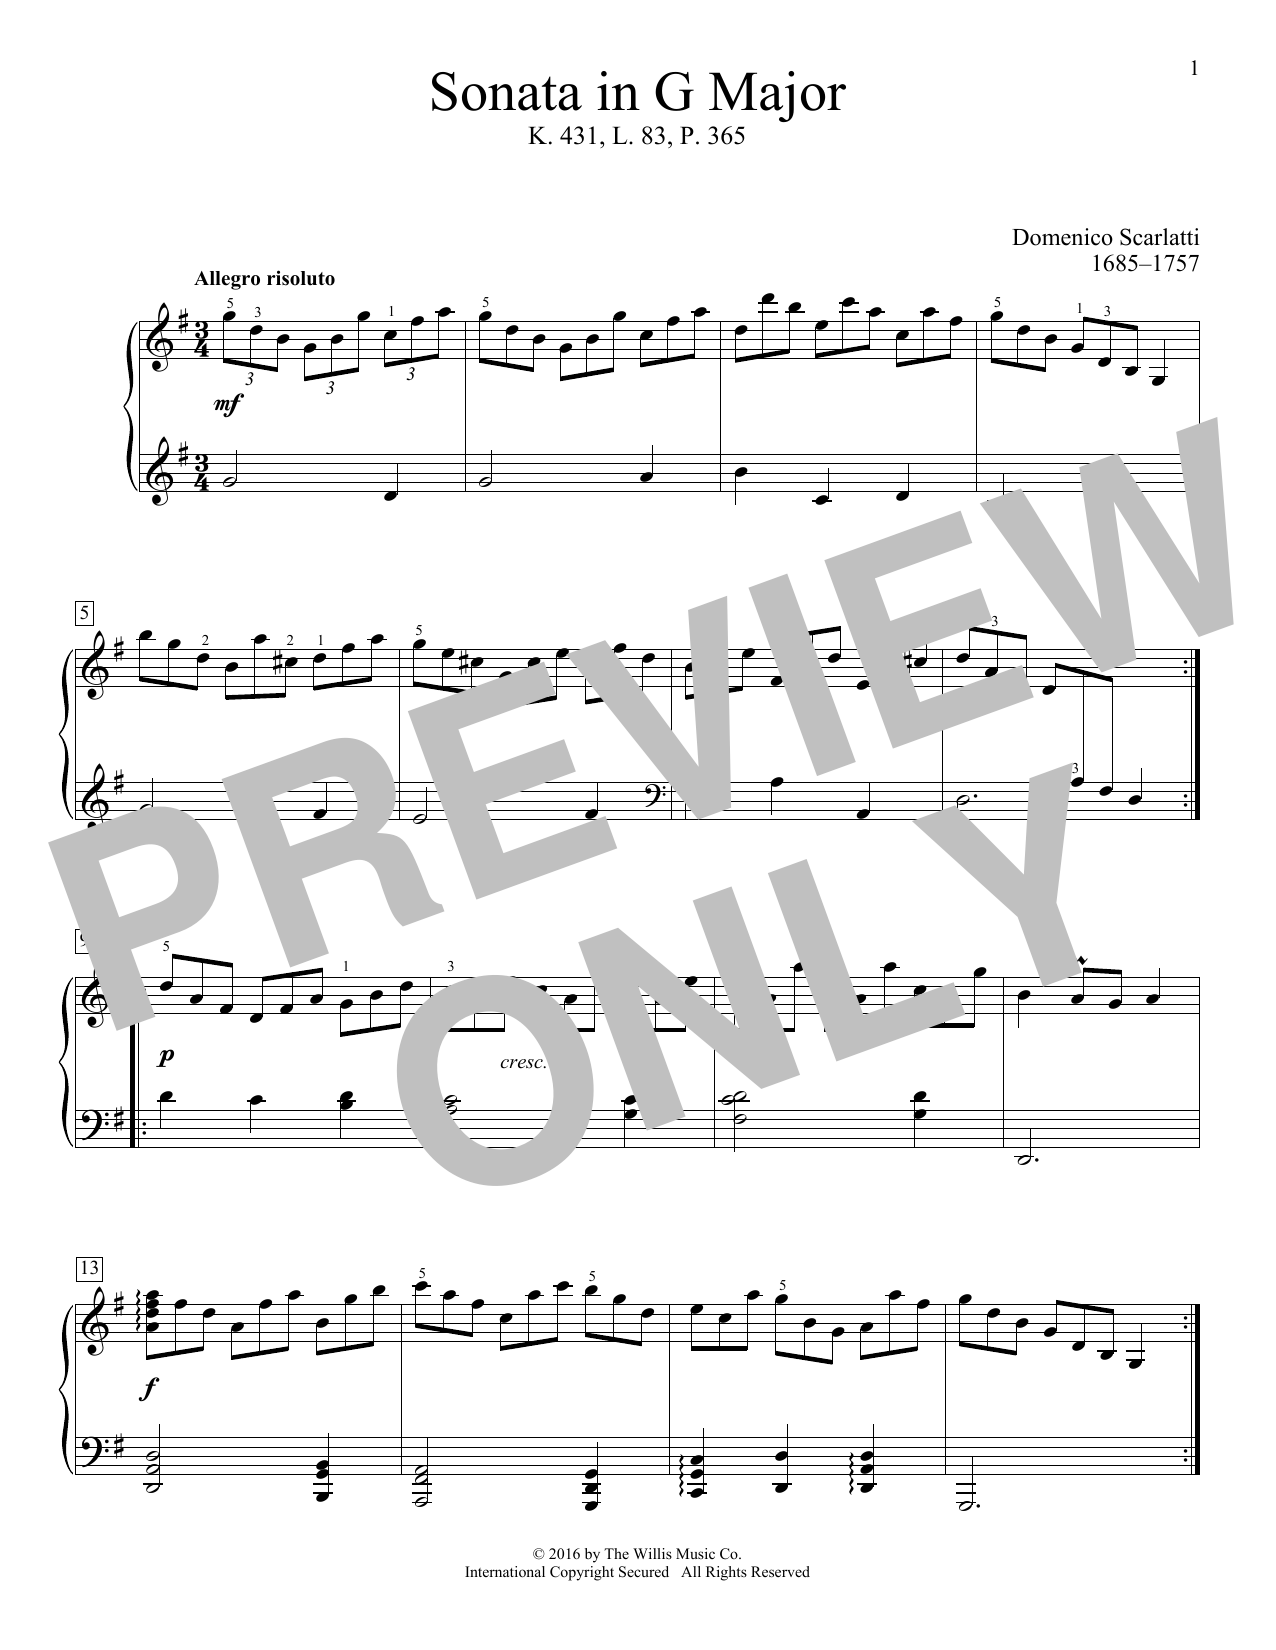 Domenico Scarlatti Sonata In G Major, K. 431, L. 83, P. 365 Sheet Music Notes & Chords for Educational Piano - Download or Print PDF